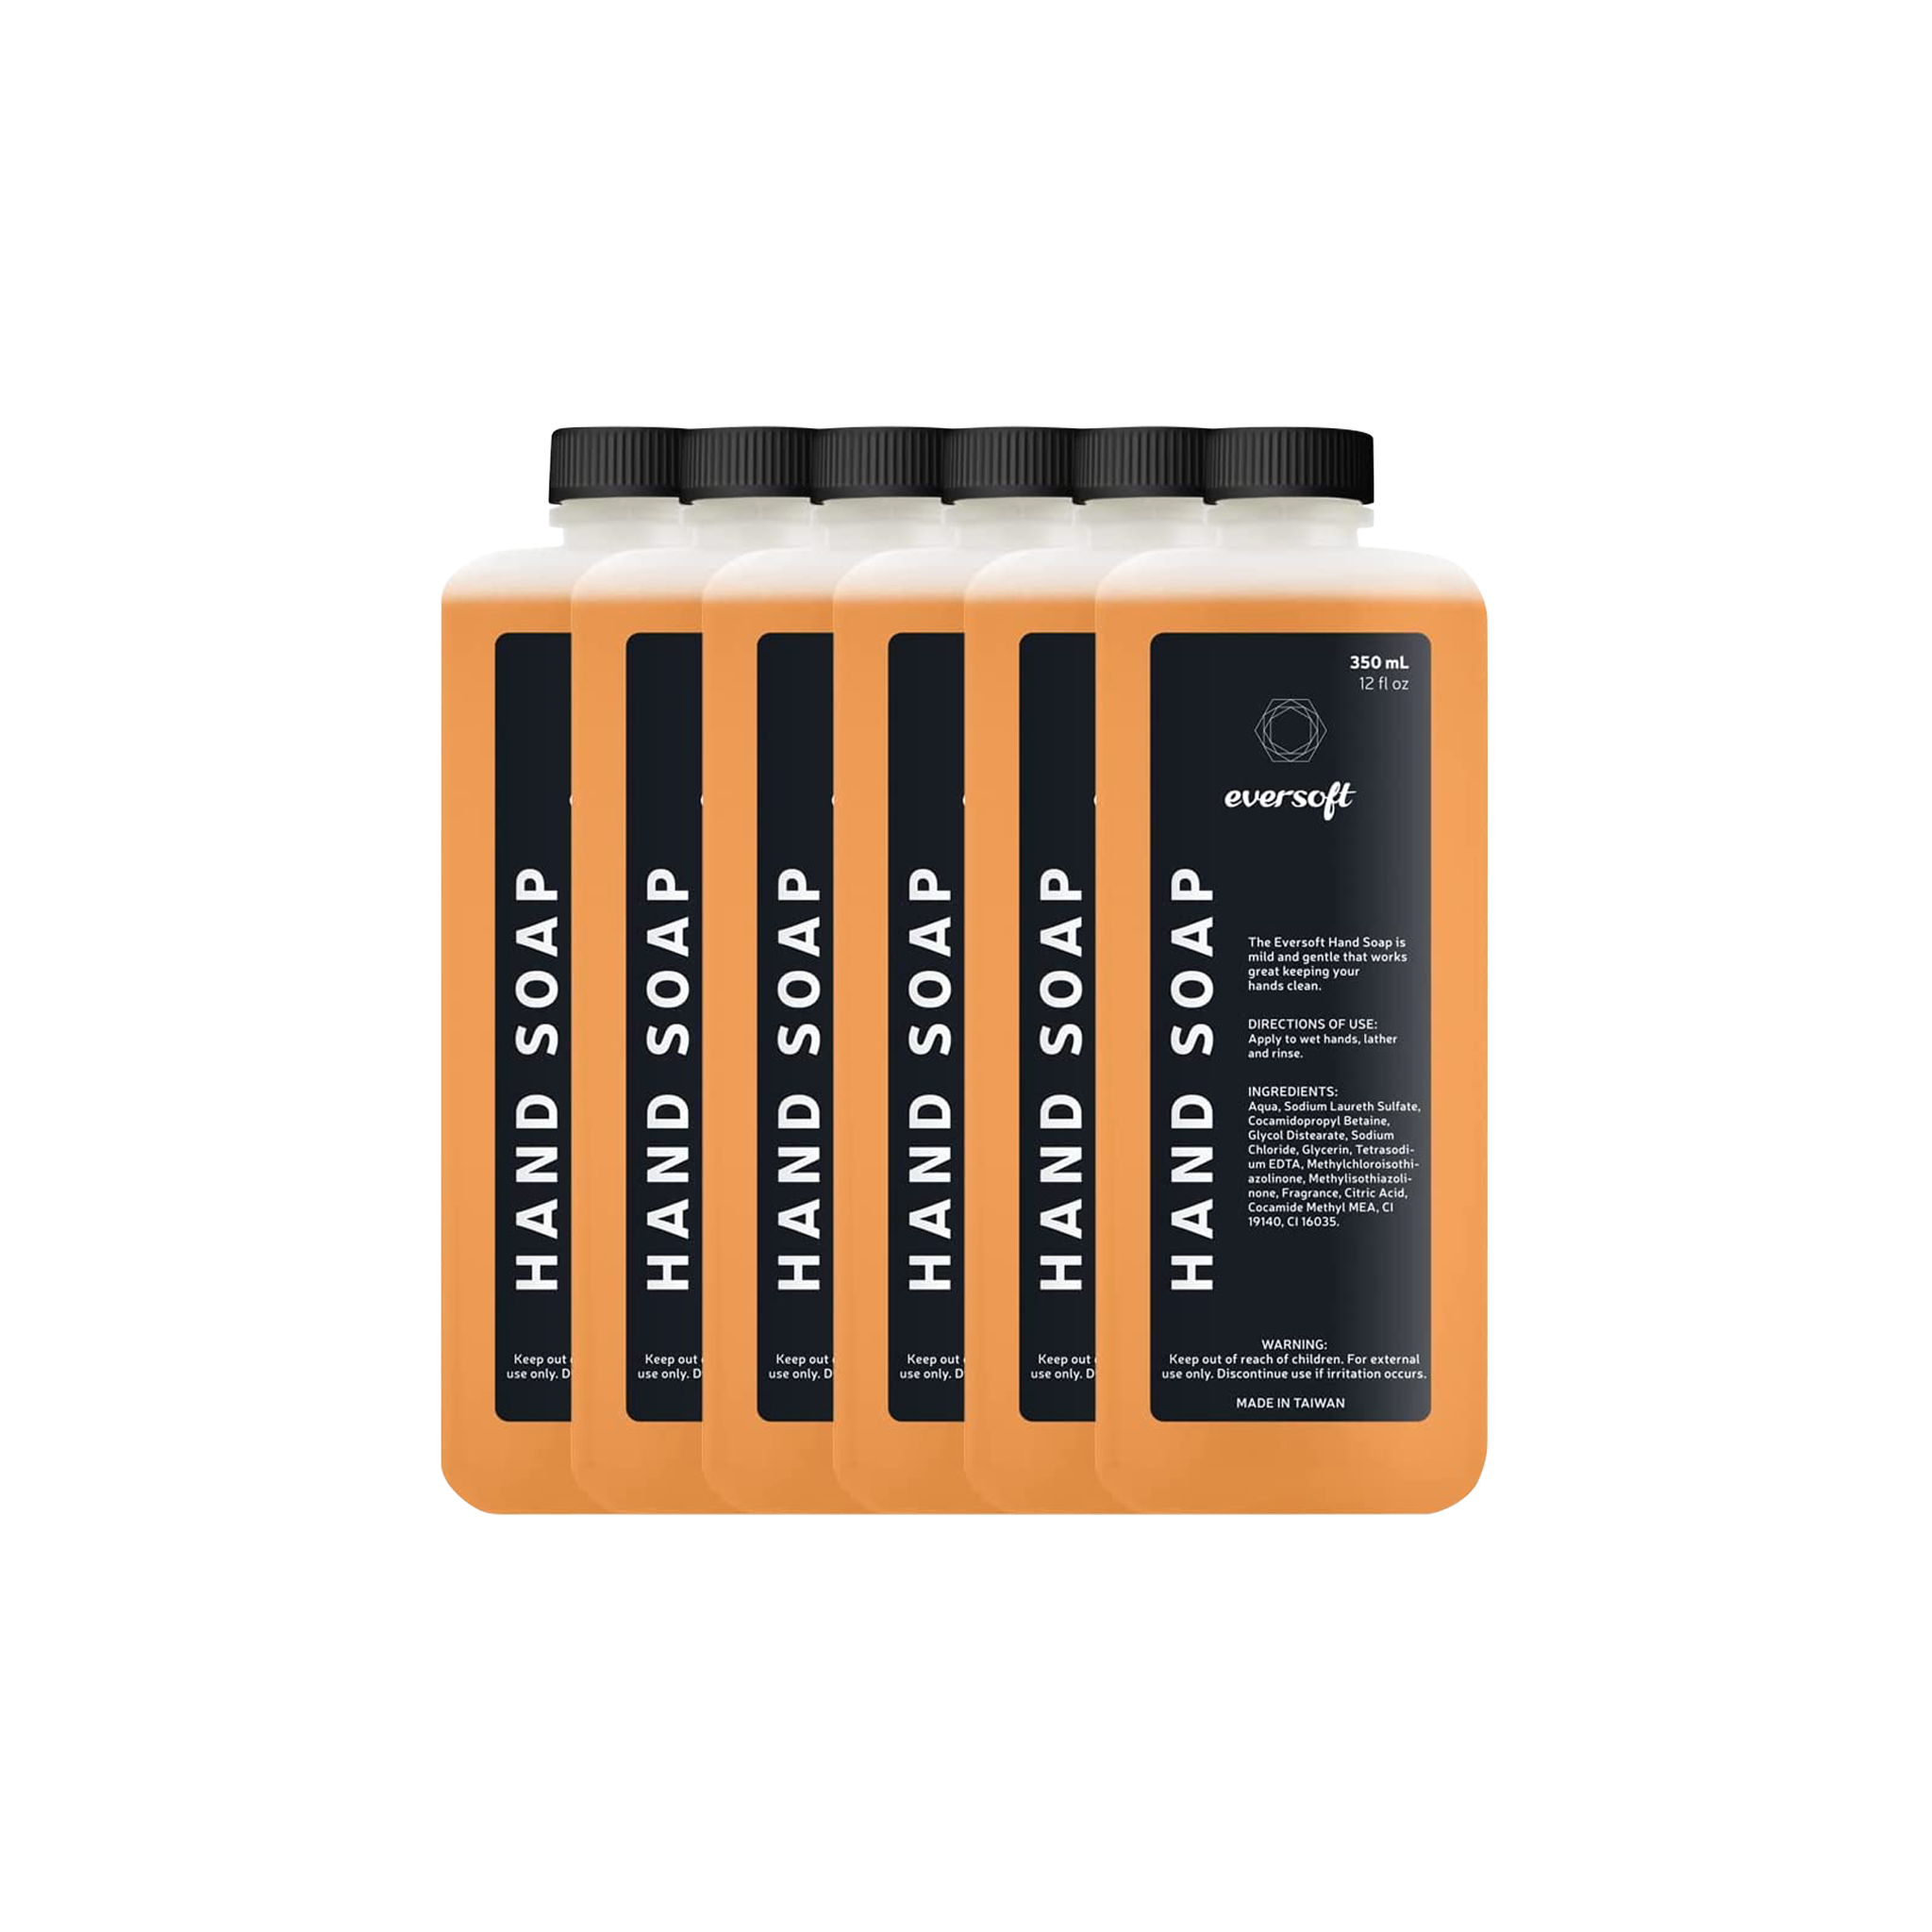 Draco Dispenser Refill Cartridges – Case of 6